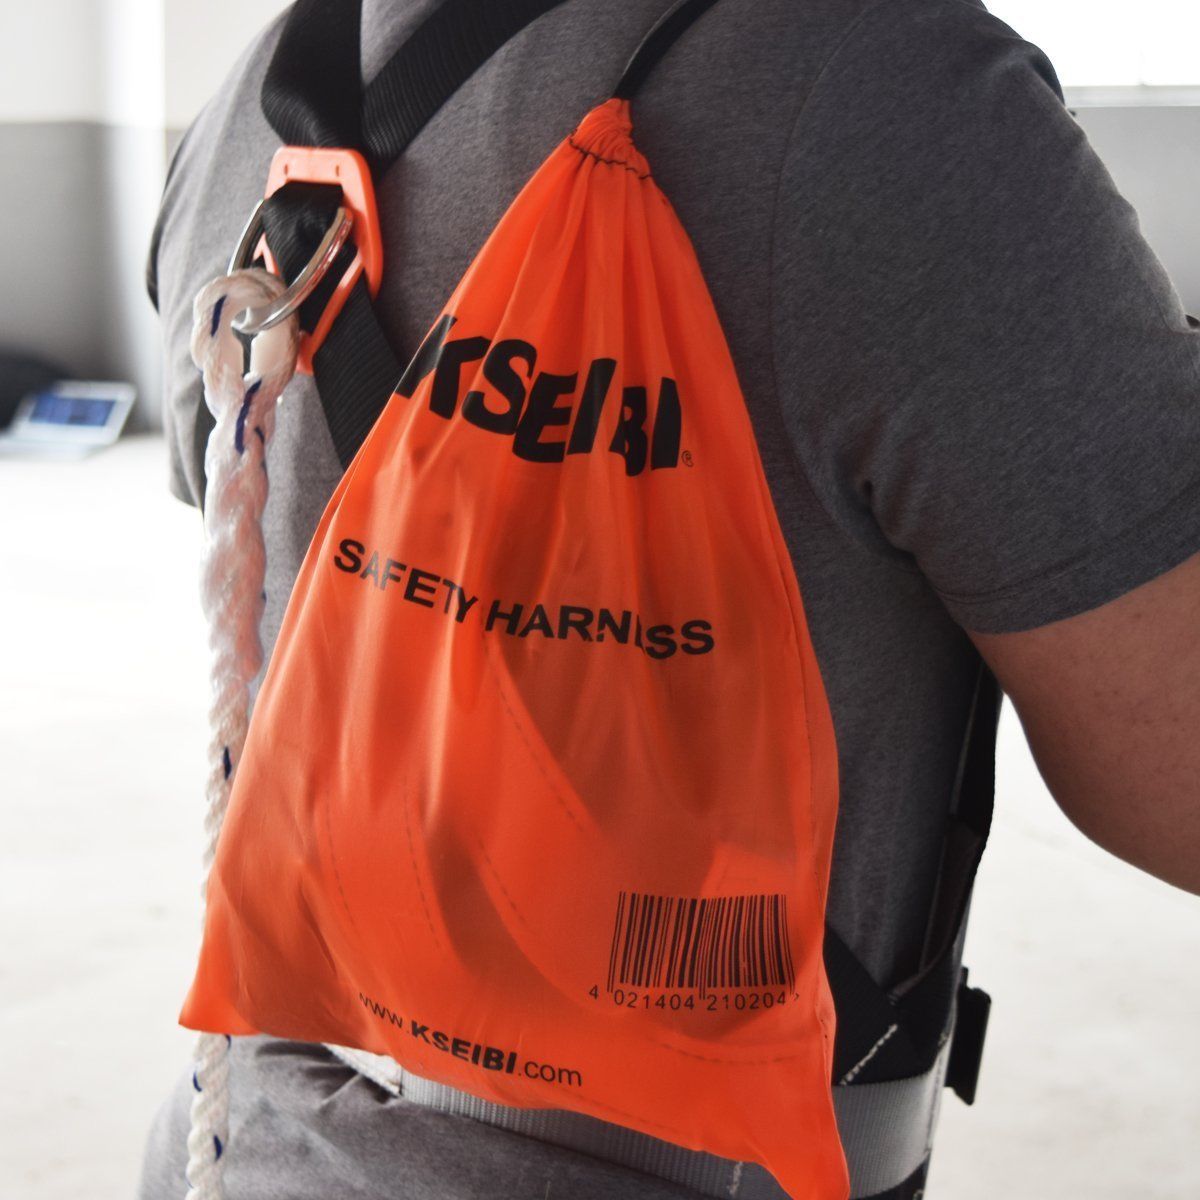 KSEIBI 421020 Safety Harness Fall Protection Kit